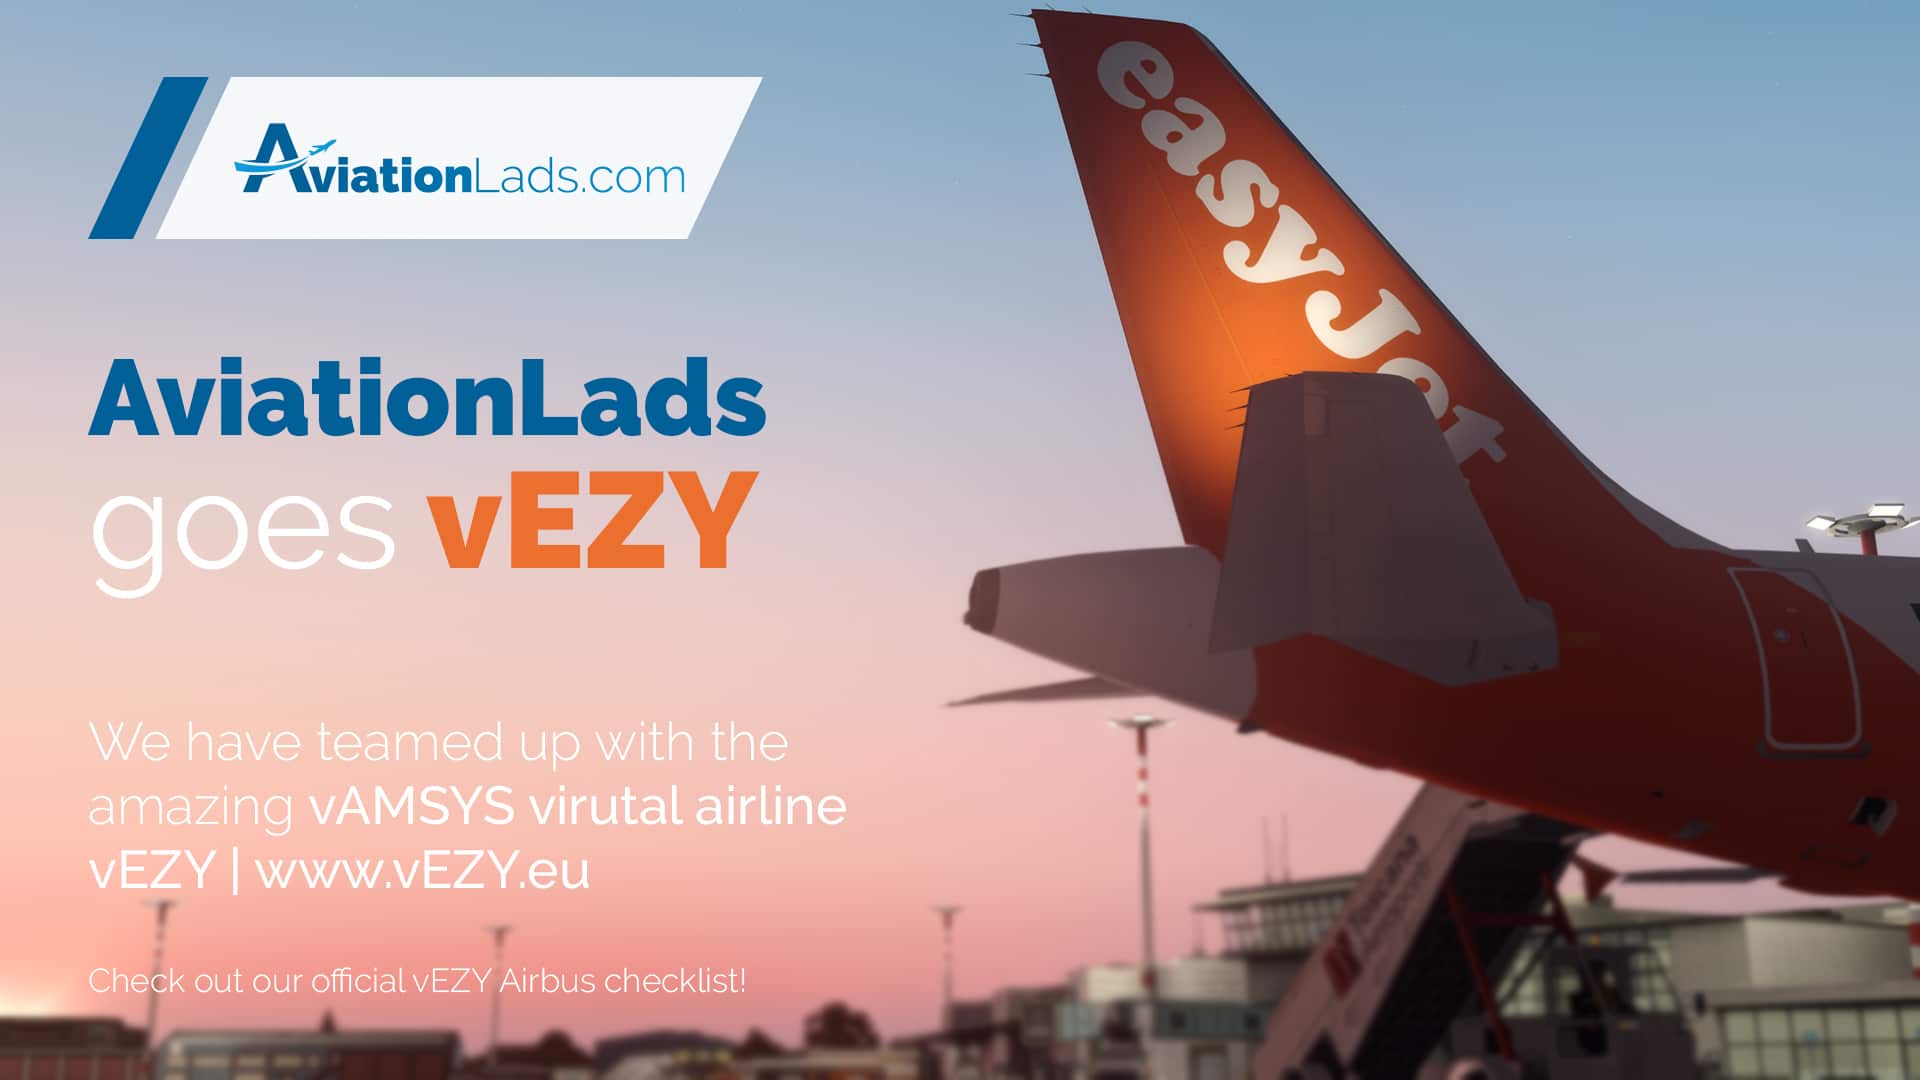 [TRAILER] vEZY | vAMSYS Virtual Airline